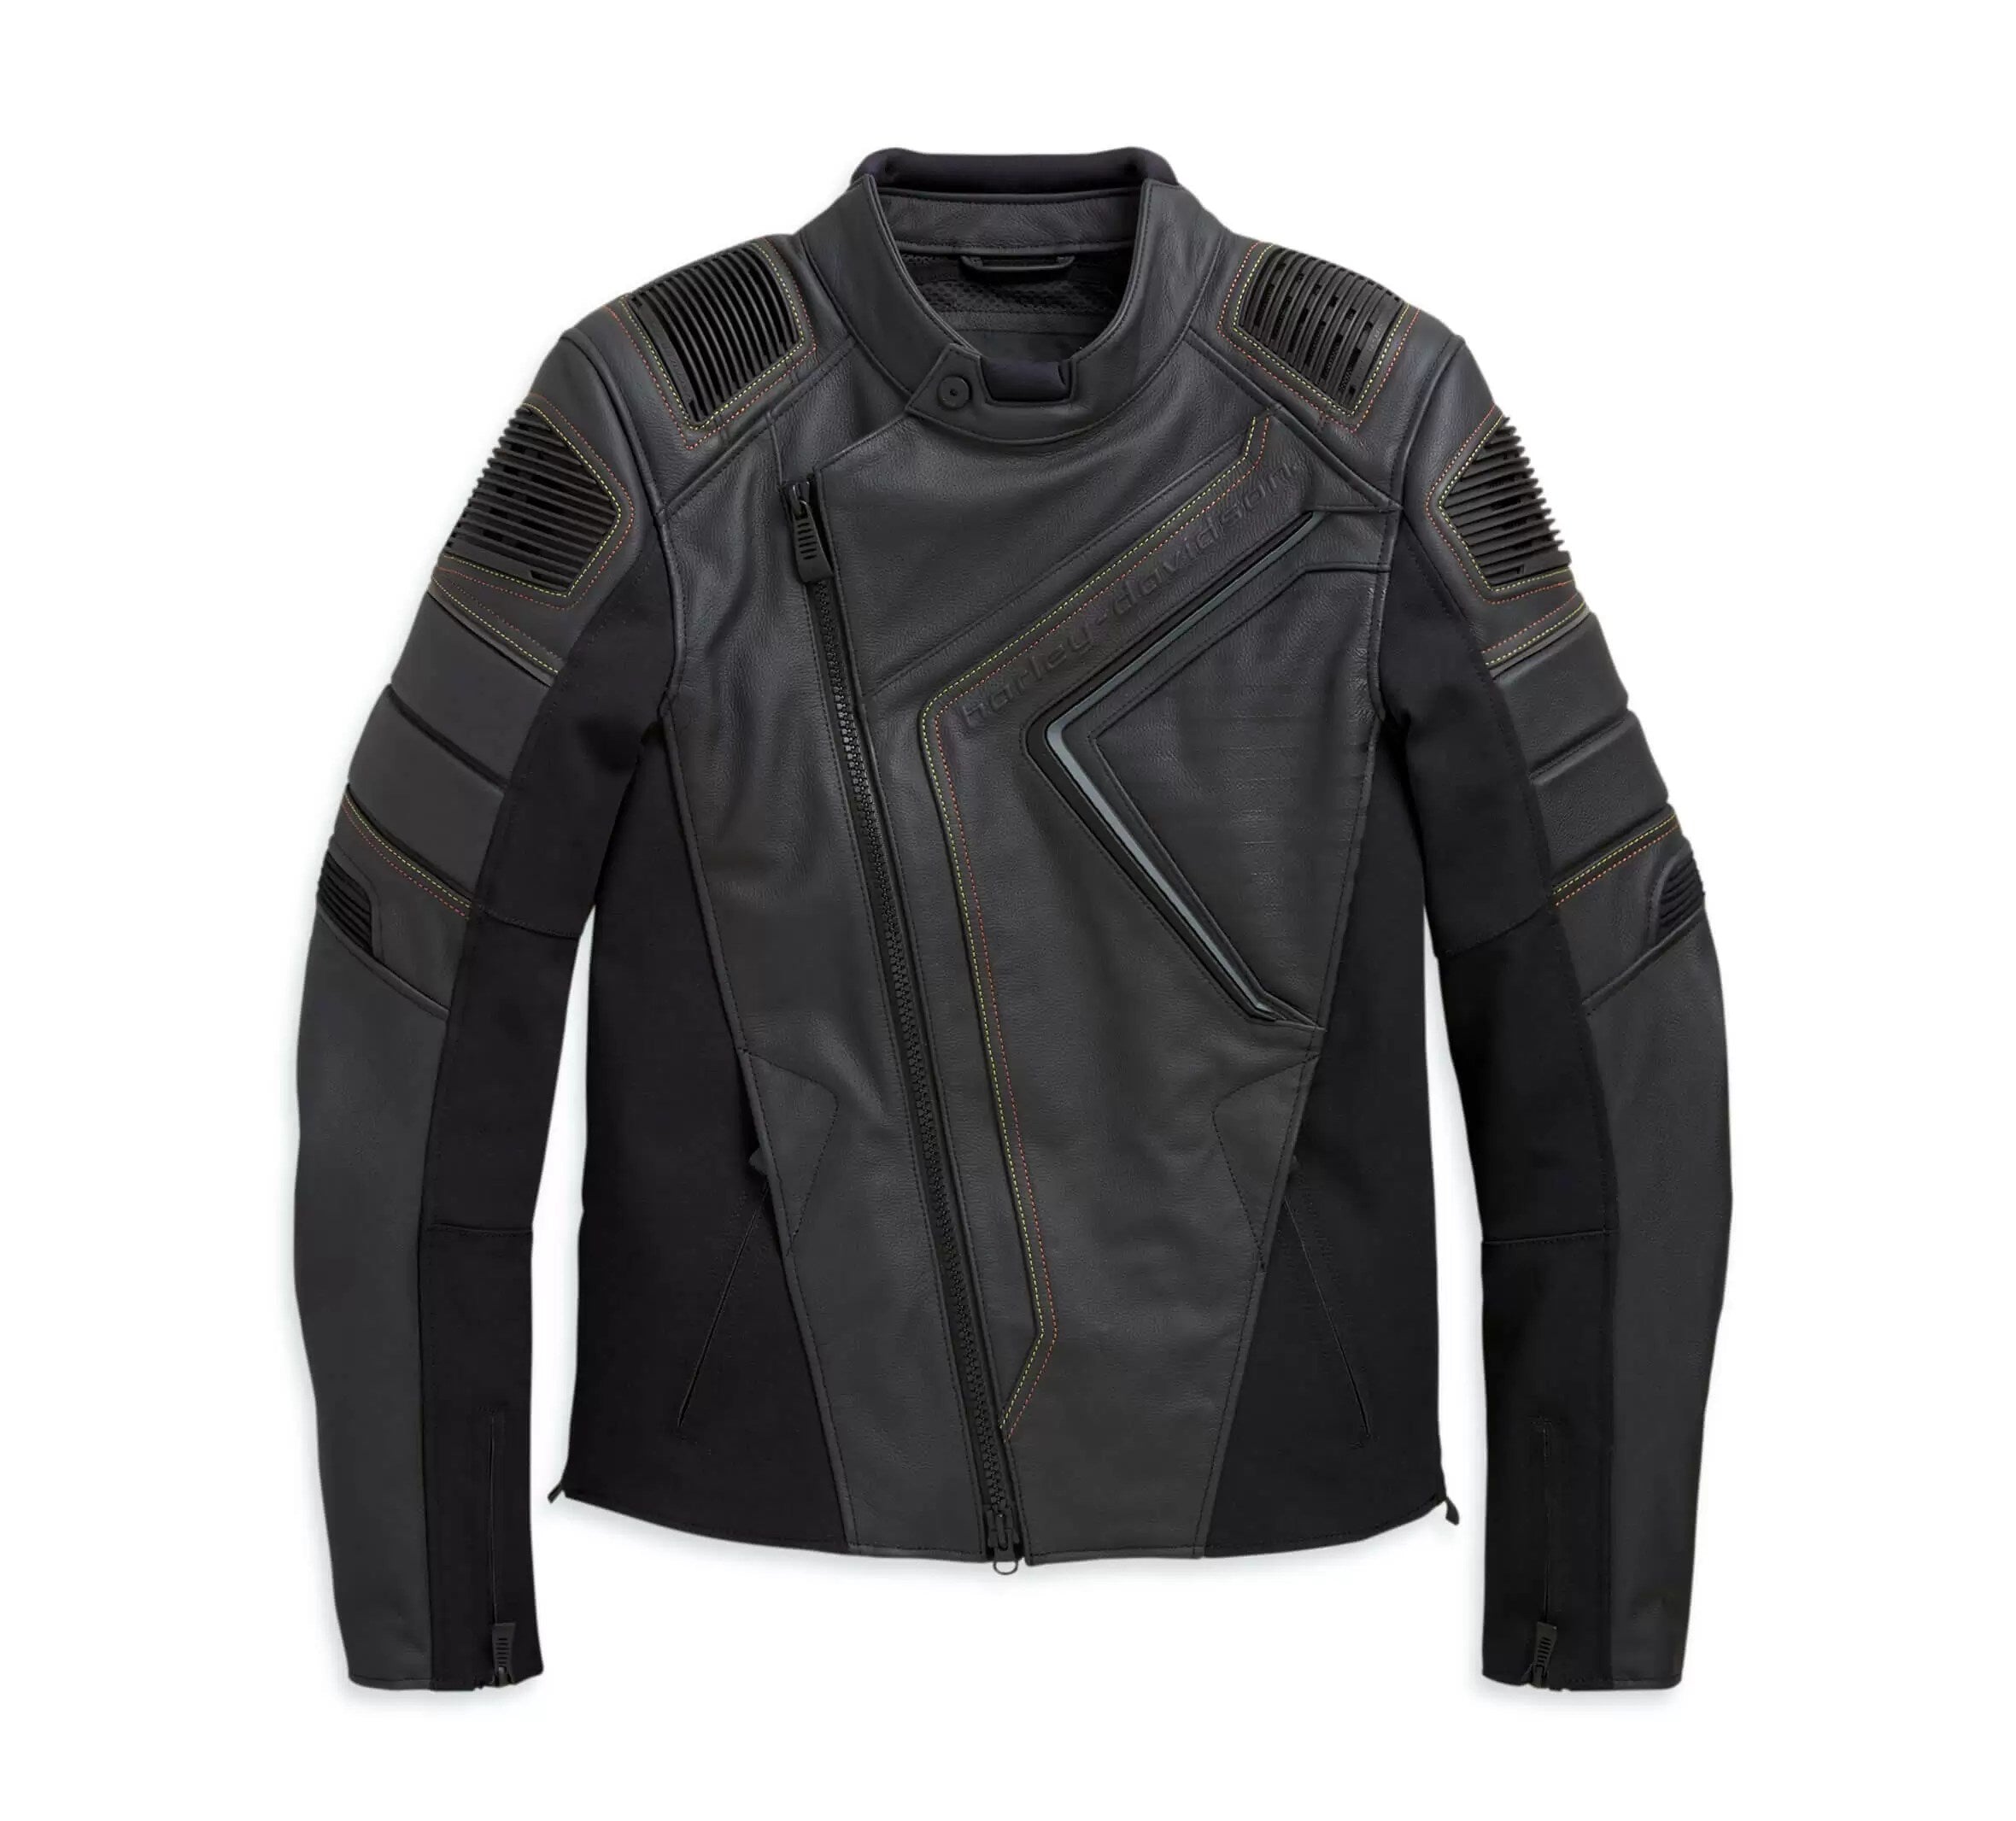 Harley Davidson Motorcycle Watt Leather Jacket